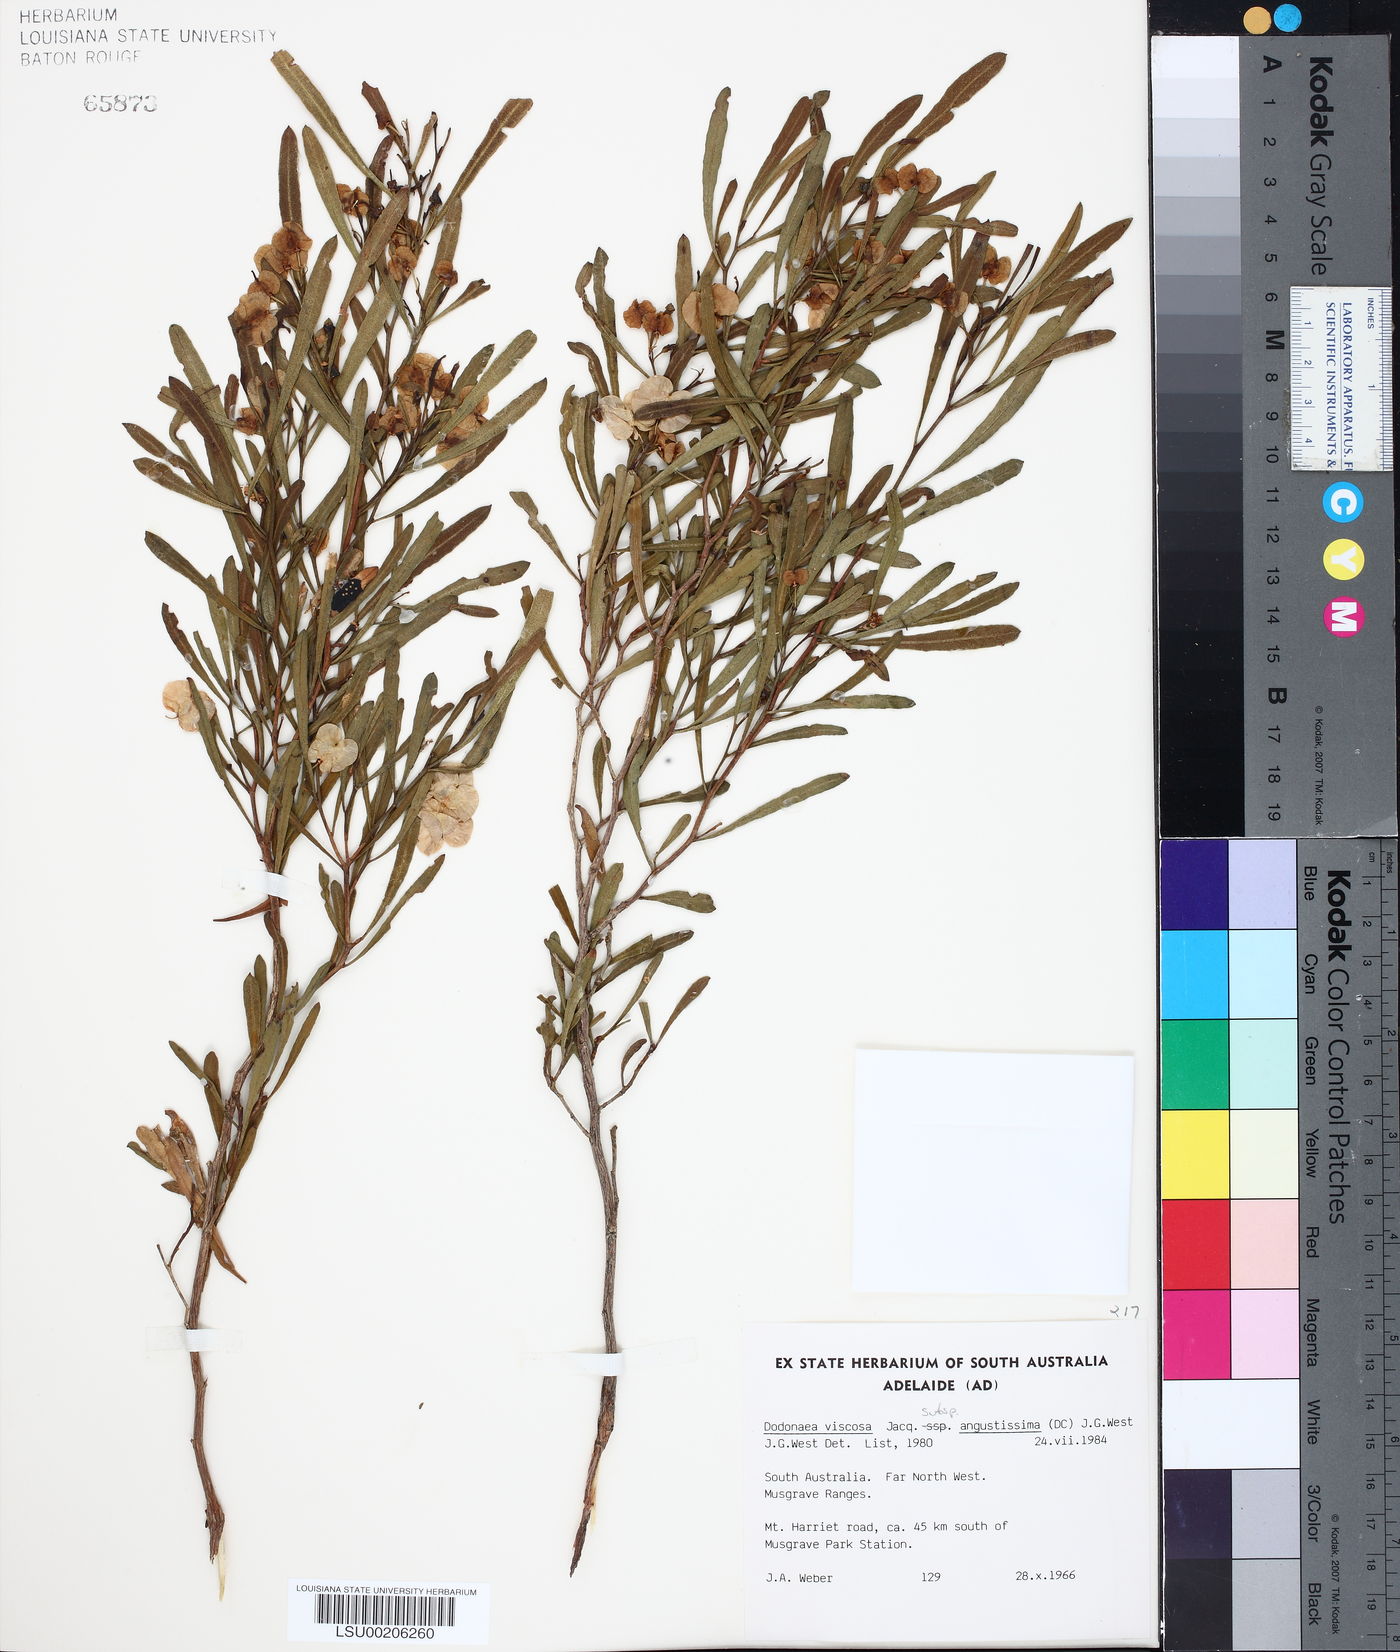 Dodonaea viscosa subsp. angustissima image